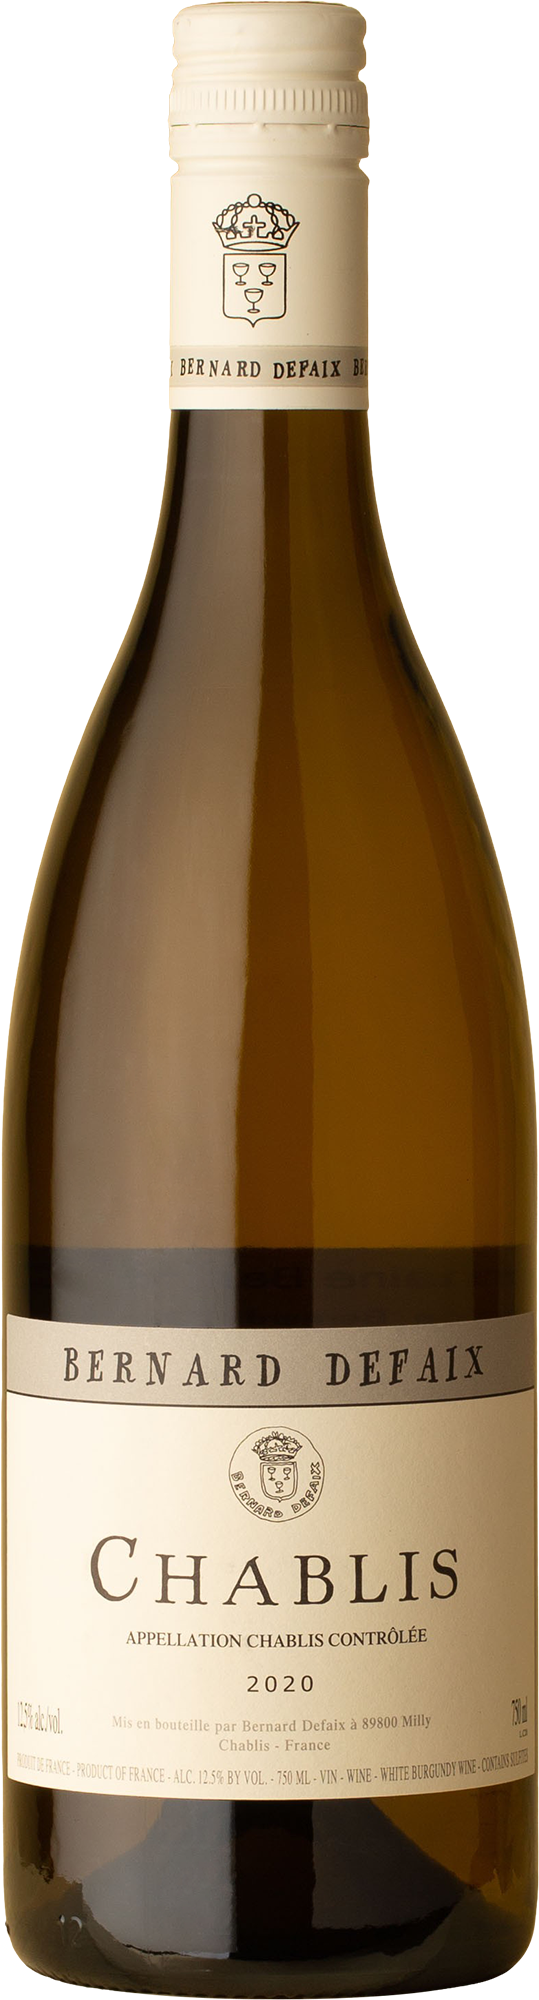 Bernard Defaix - Chablis Chardonnay 2020 White Wine